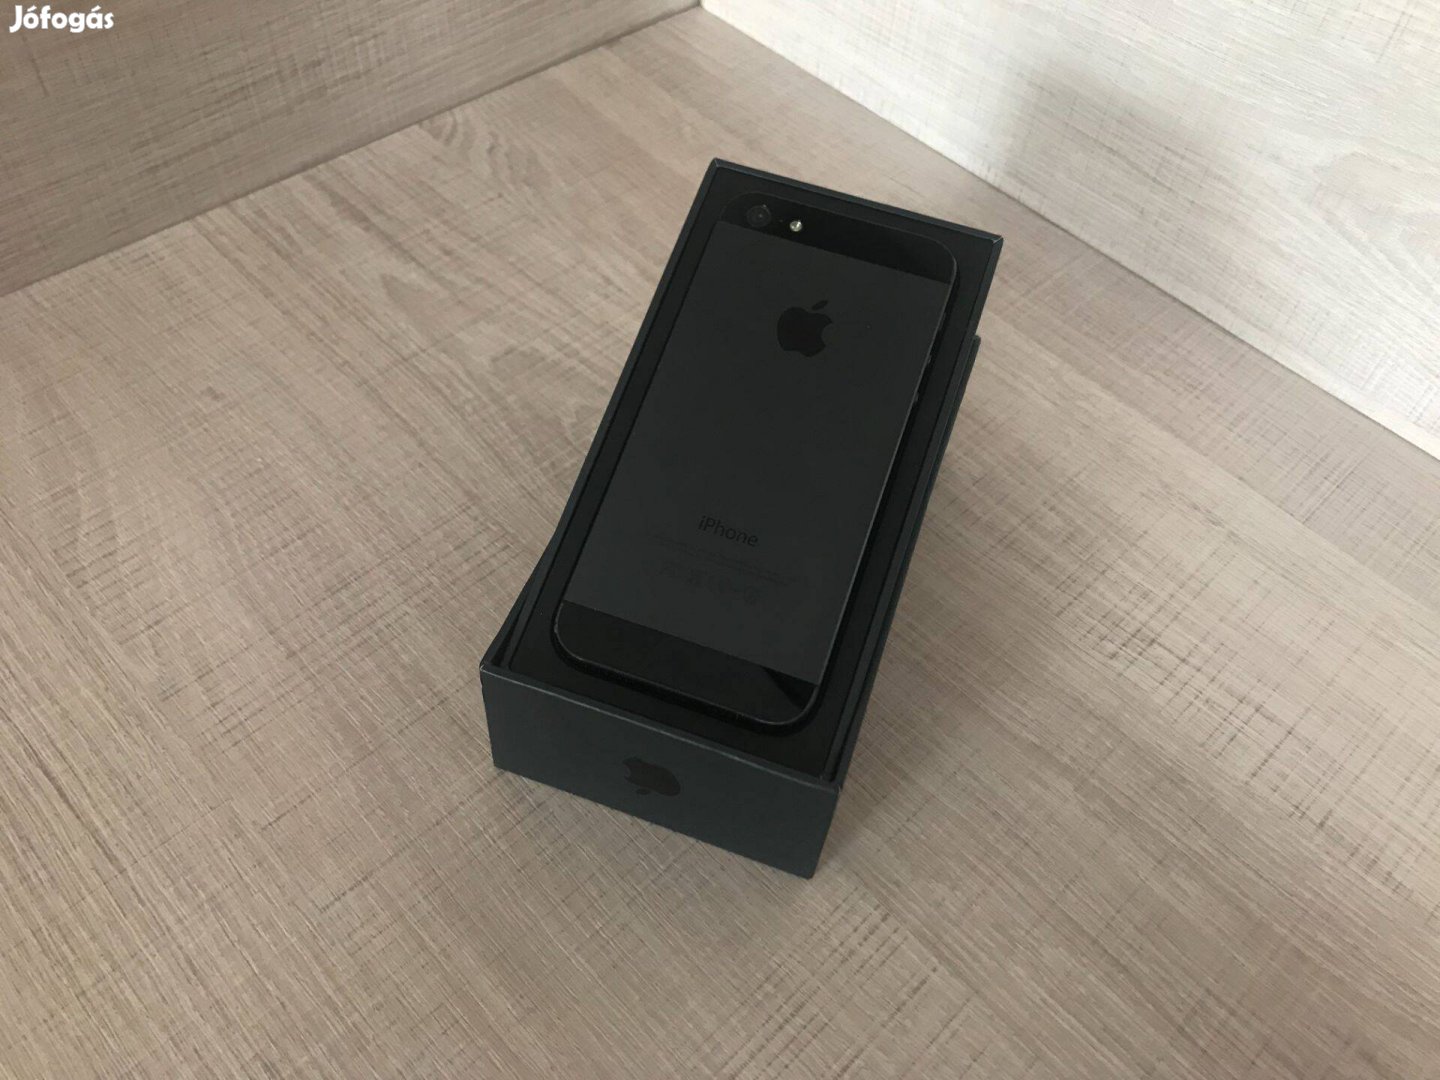 Apple Iphone 5 16GB, Újszerű, Új tartozékok, Garancia, 100%